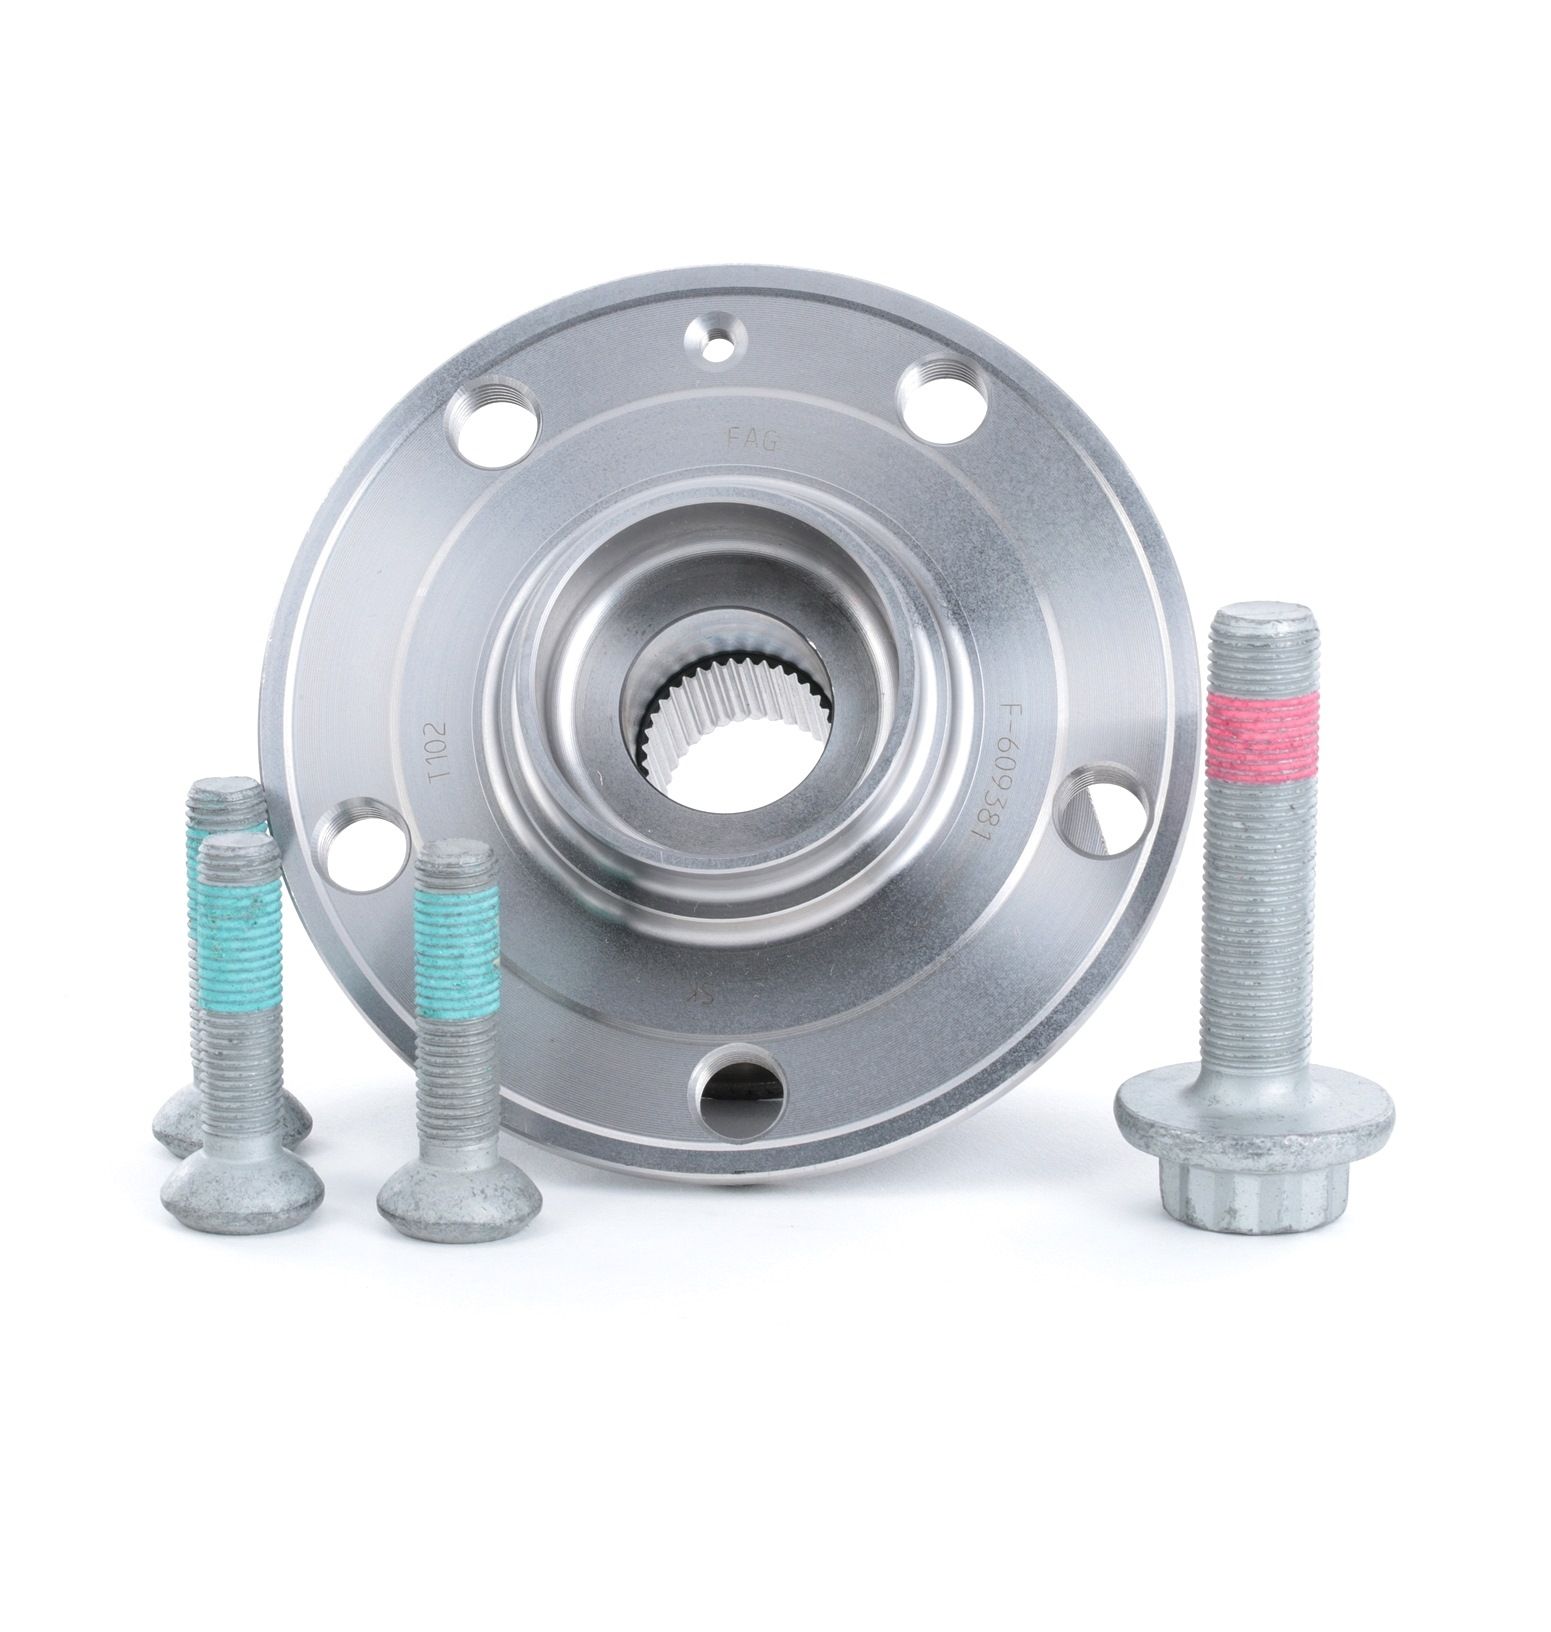 FAG 713 6109 90 Wheel bearing kit Photo corresponds to scope of supply